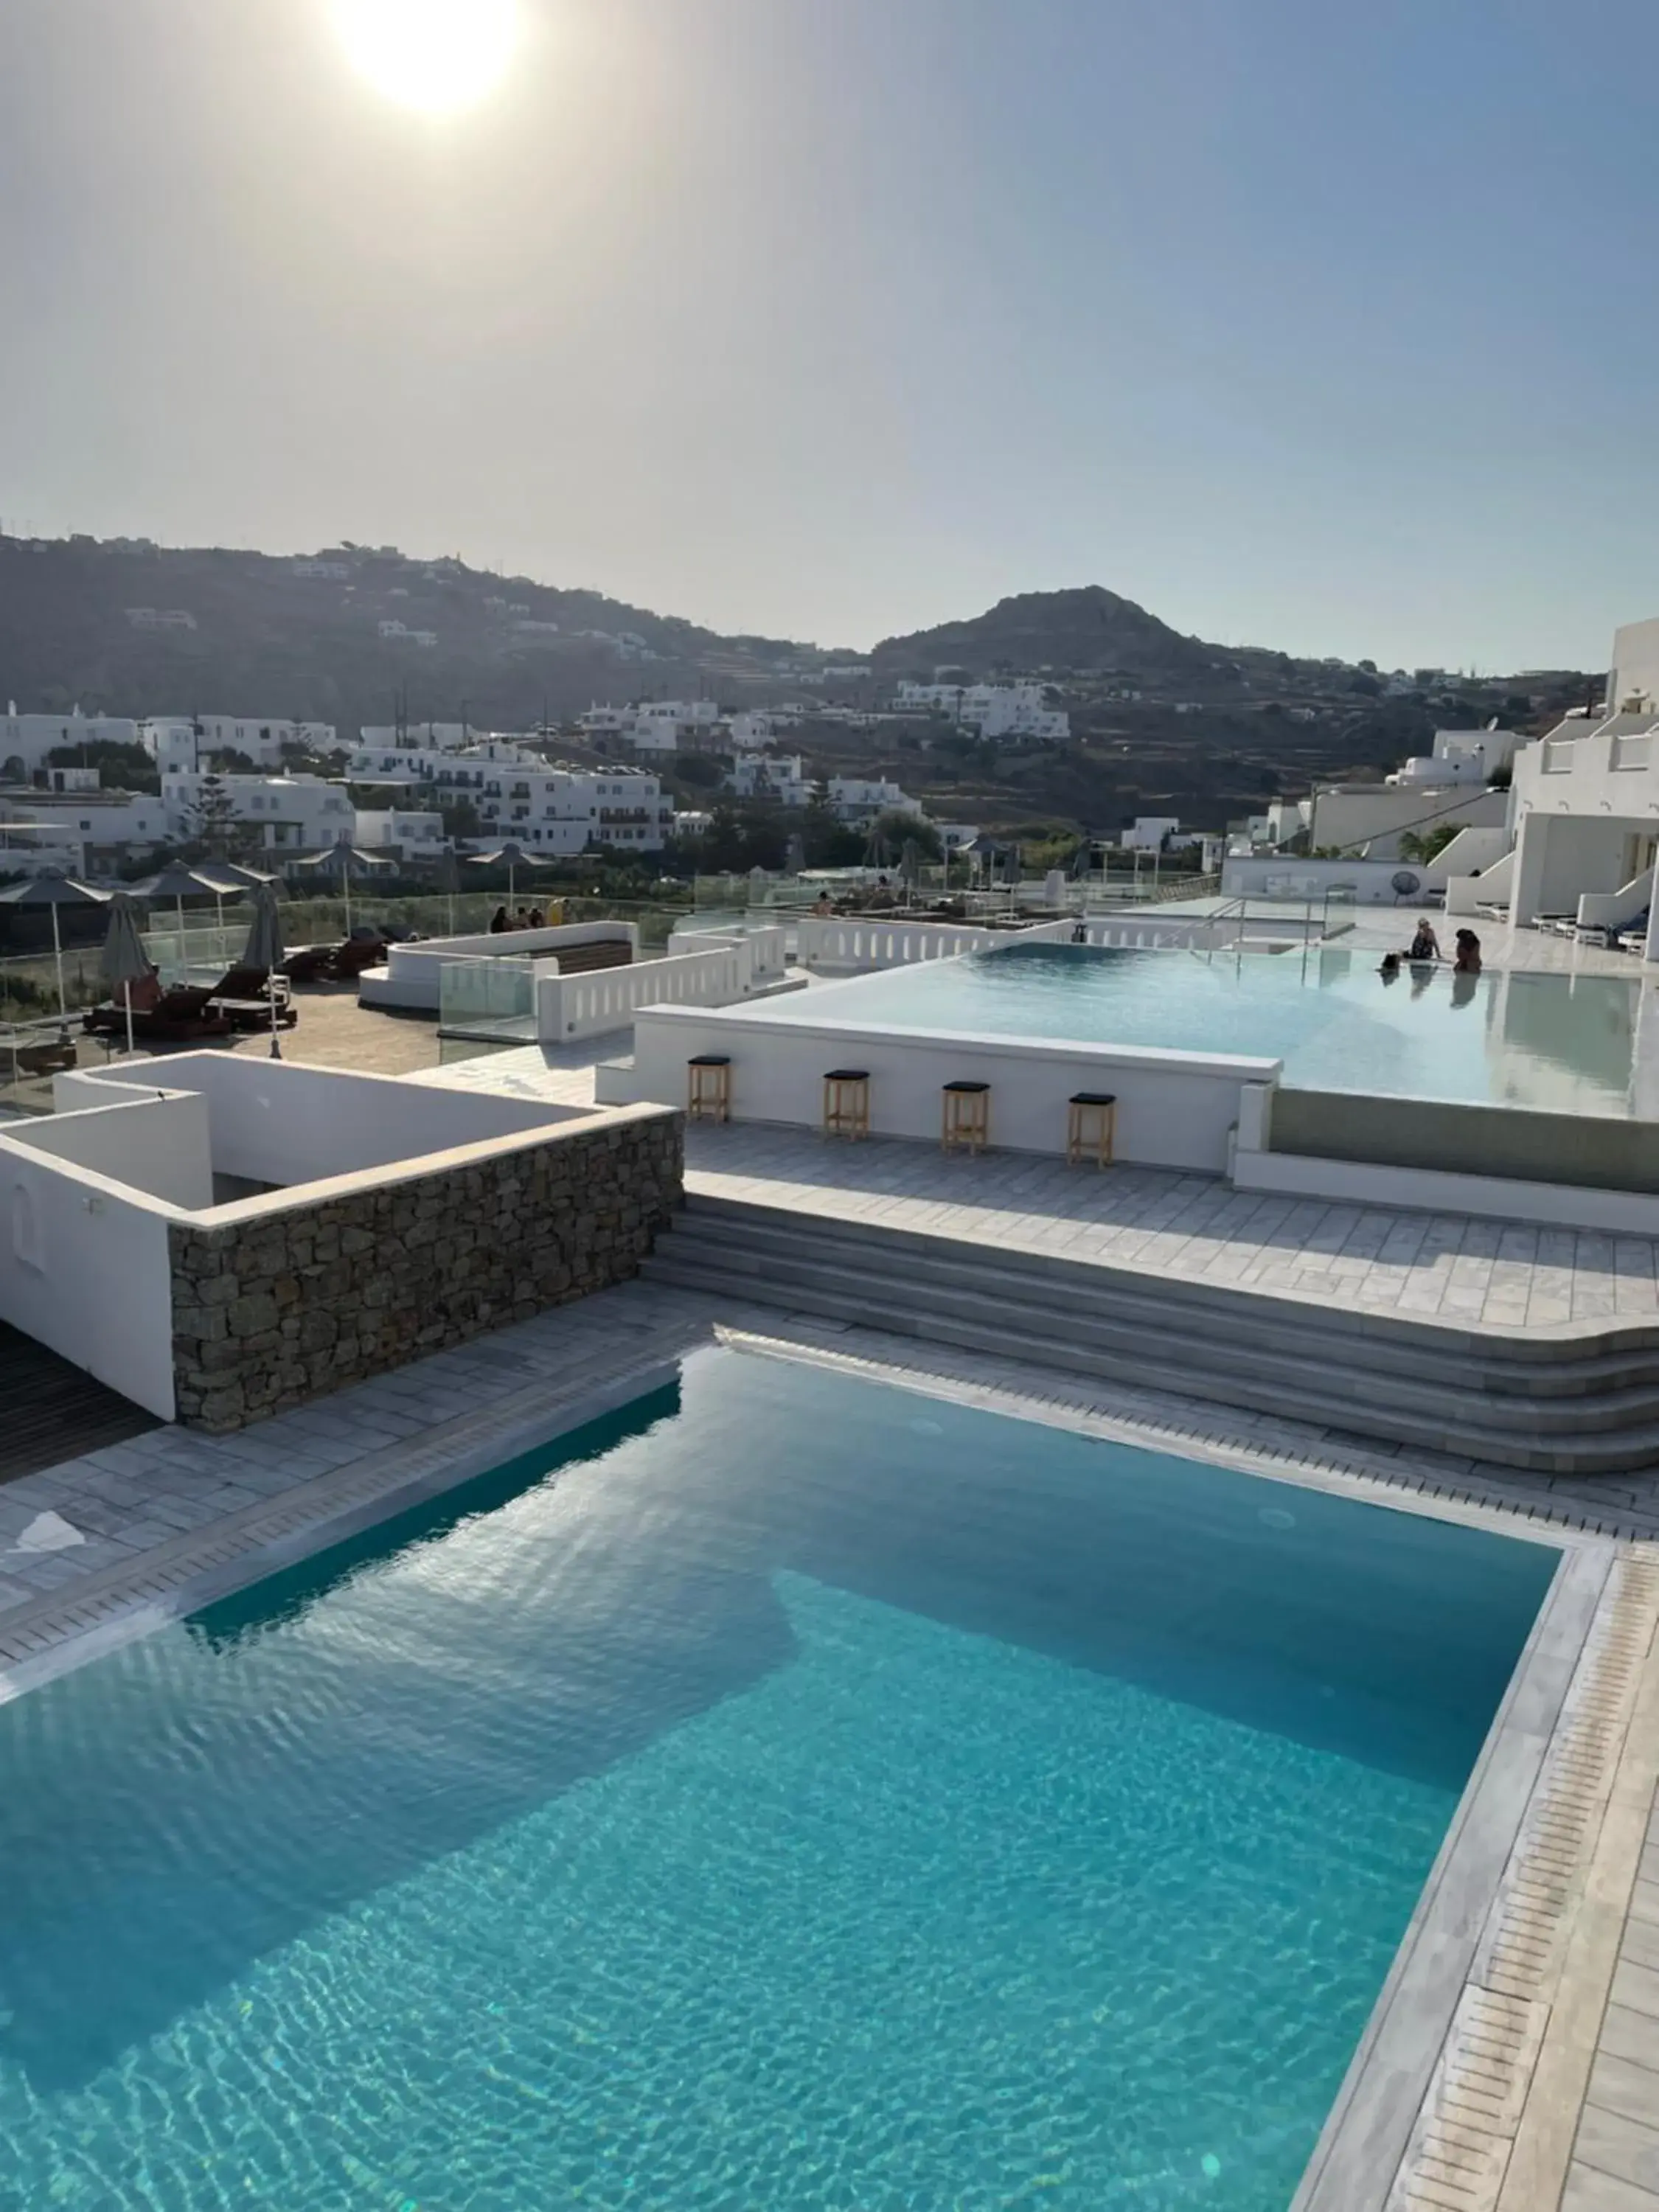 Pool view, Swimming Pool in The George Hotel Mykonos